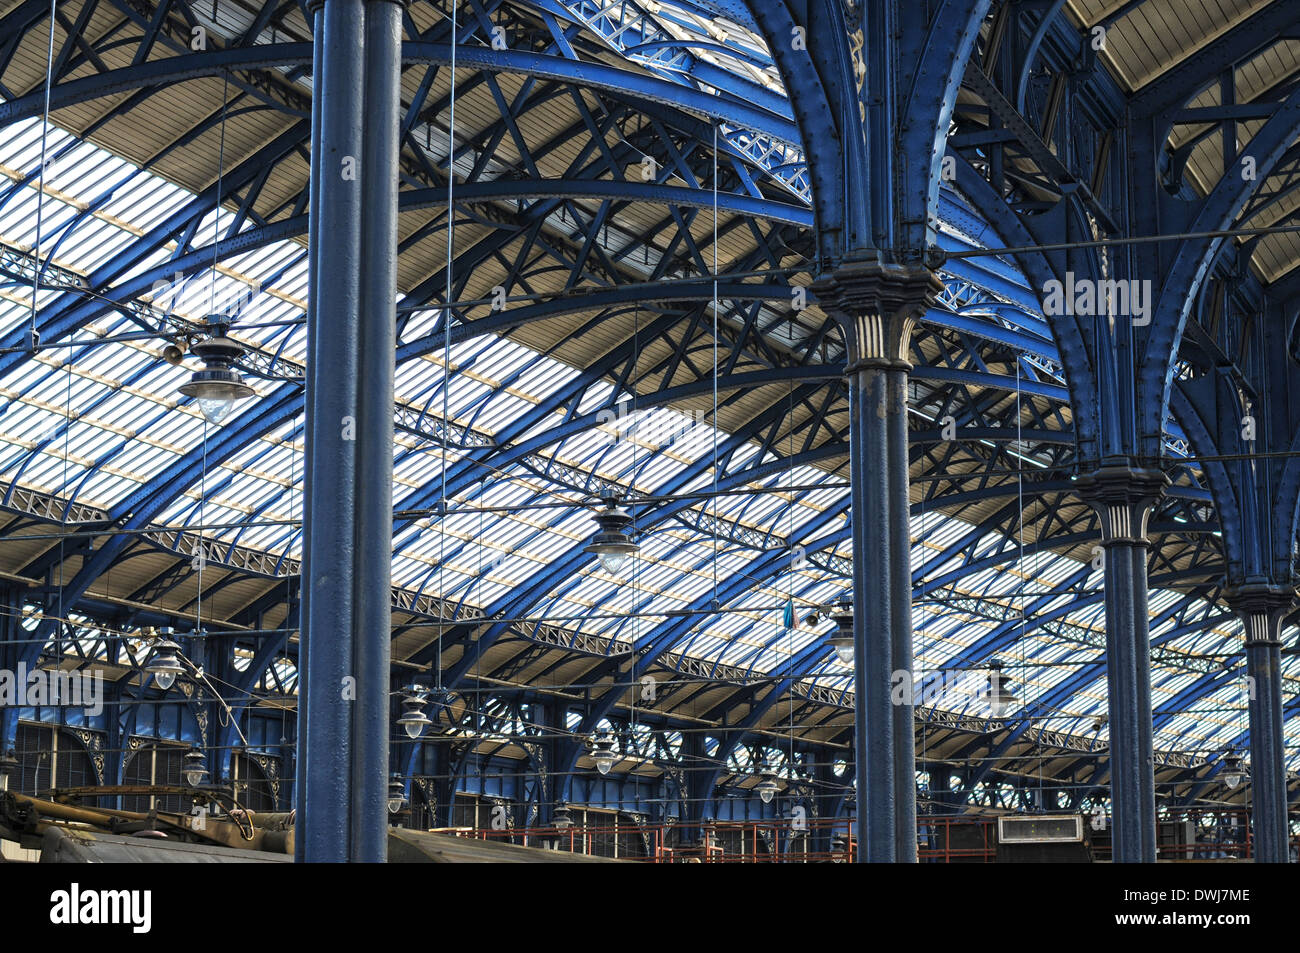 Brighton Railway Station architecture Stock Photo